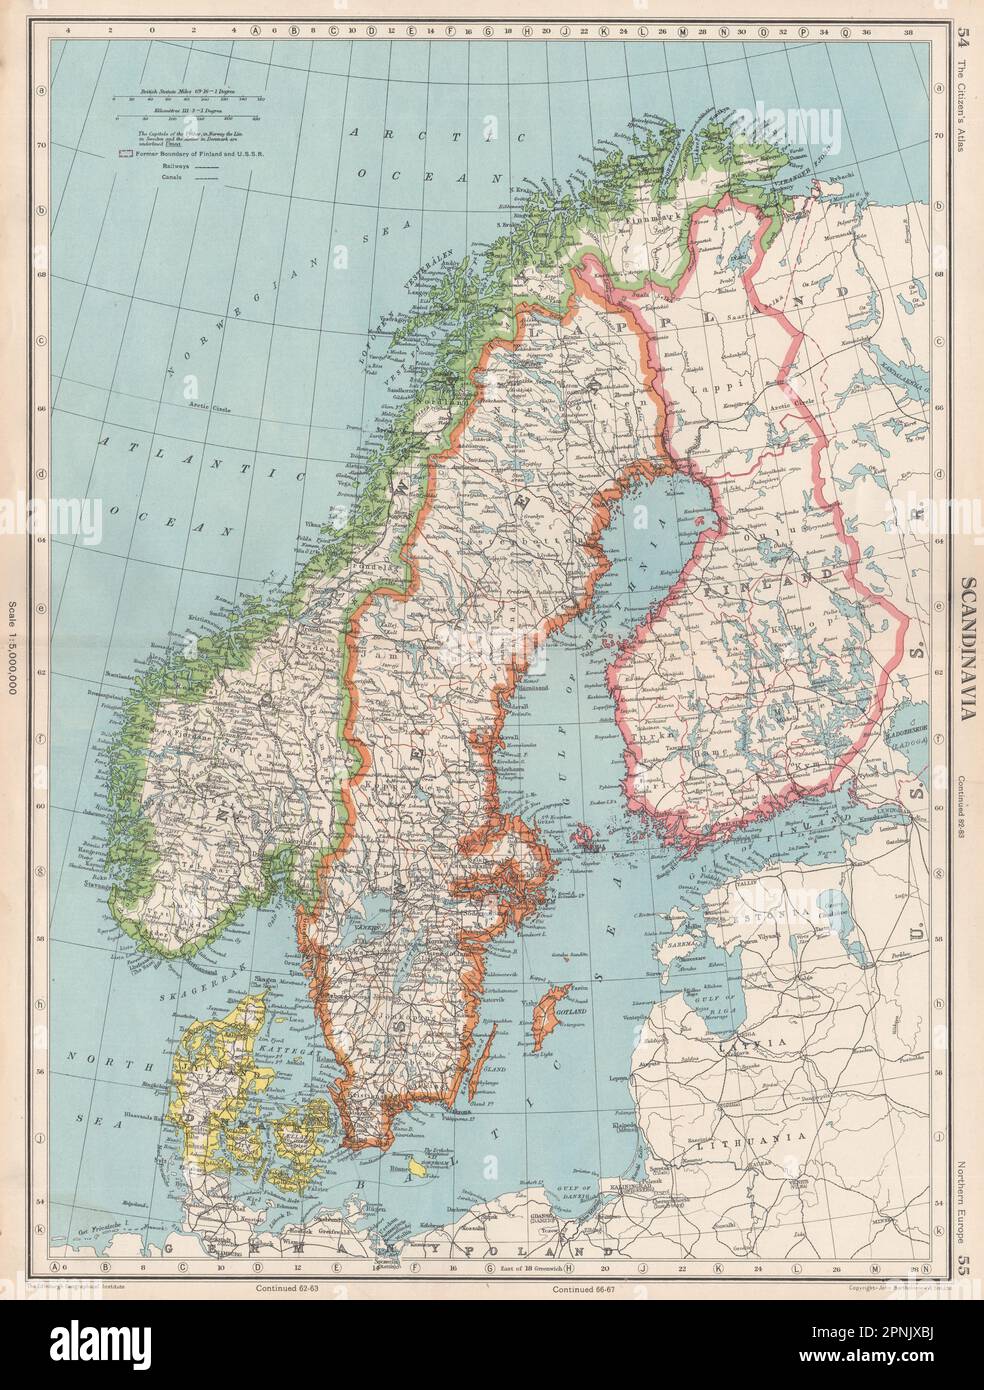 SCANDINAVIA. Sweden Norway Denmark Finland (shows < 1940 borders)  1952 map Stock Photo